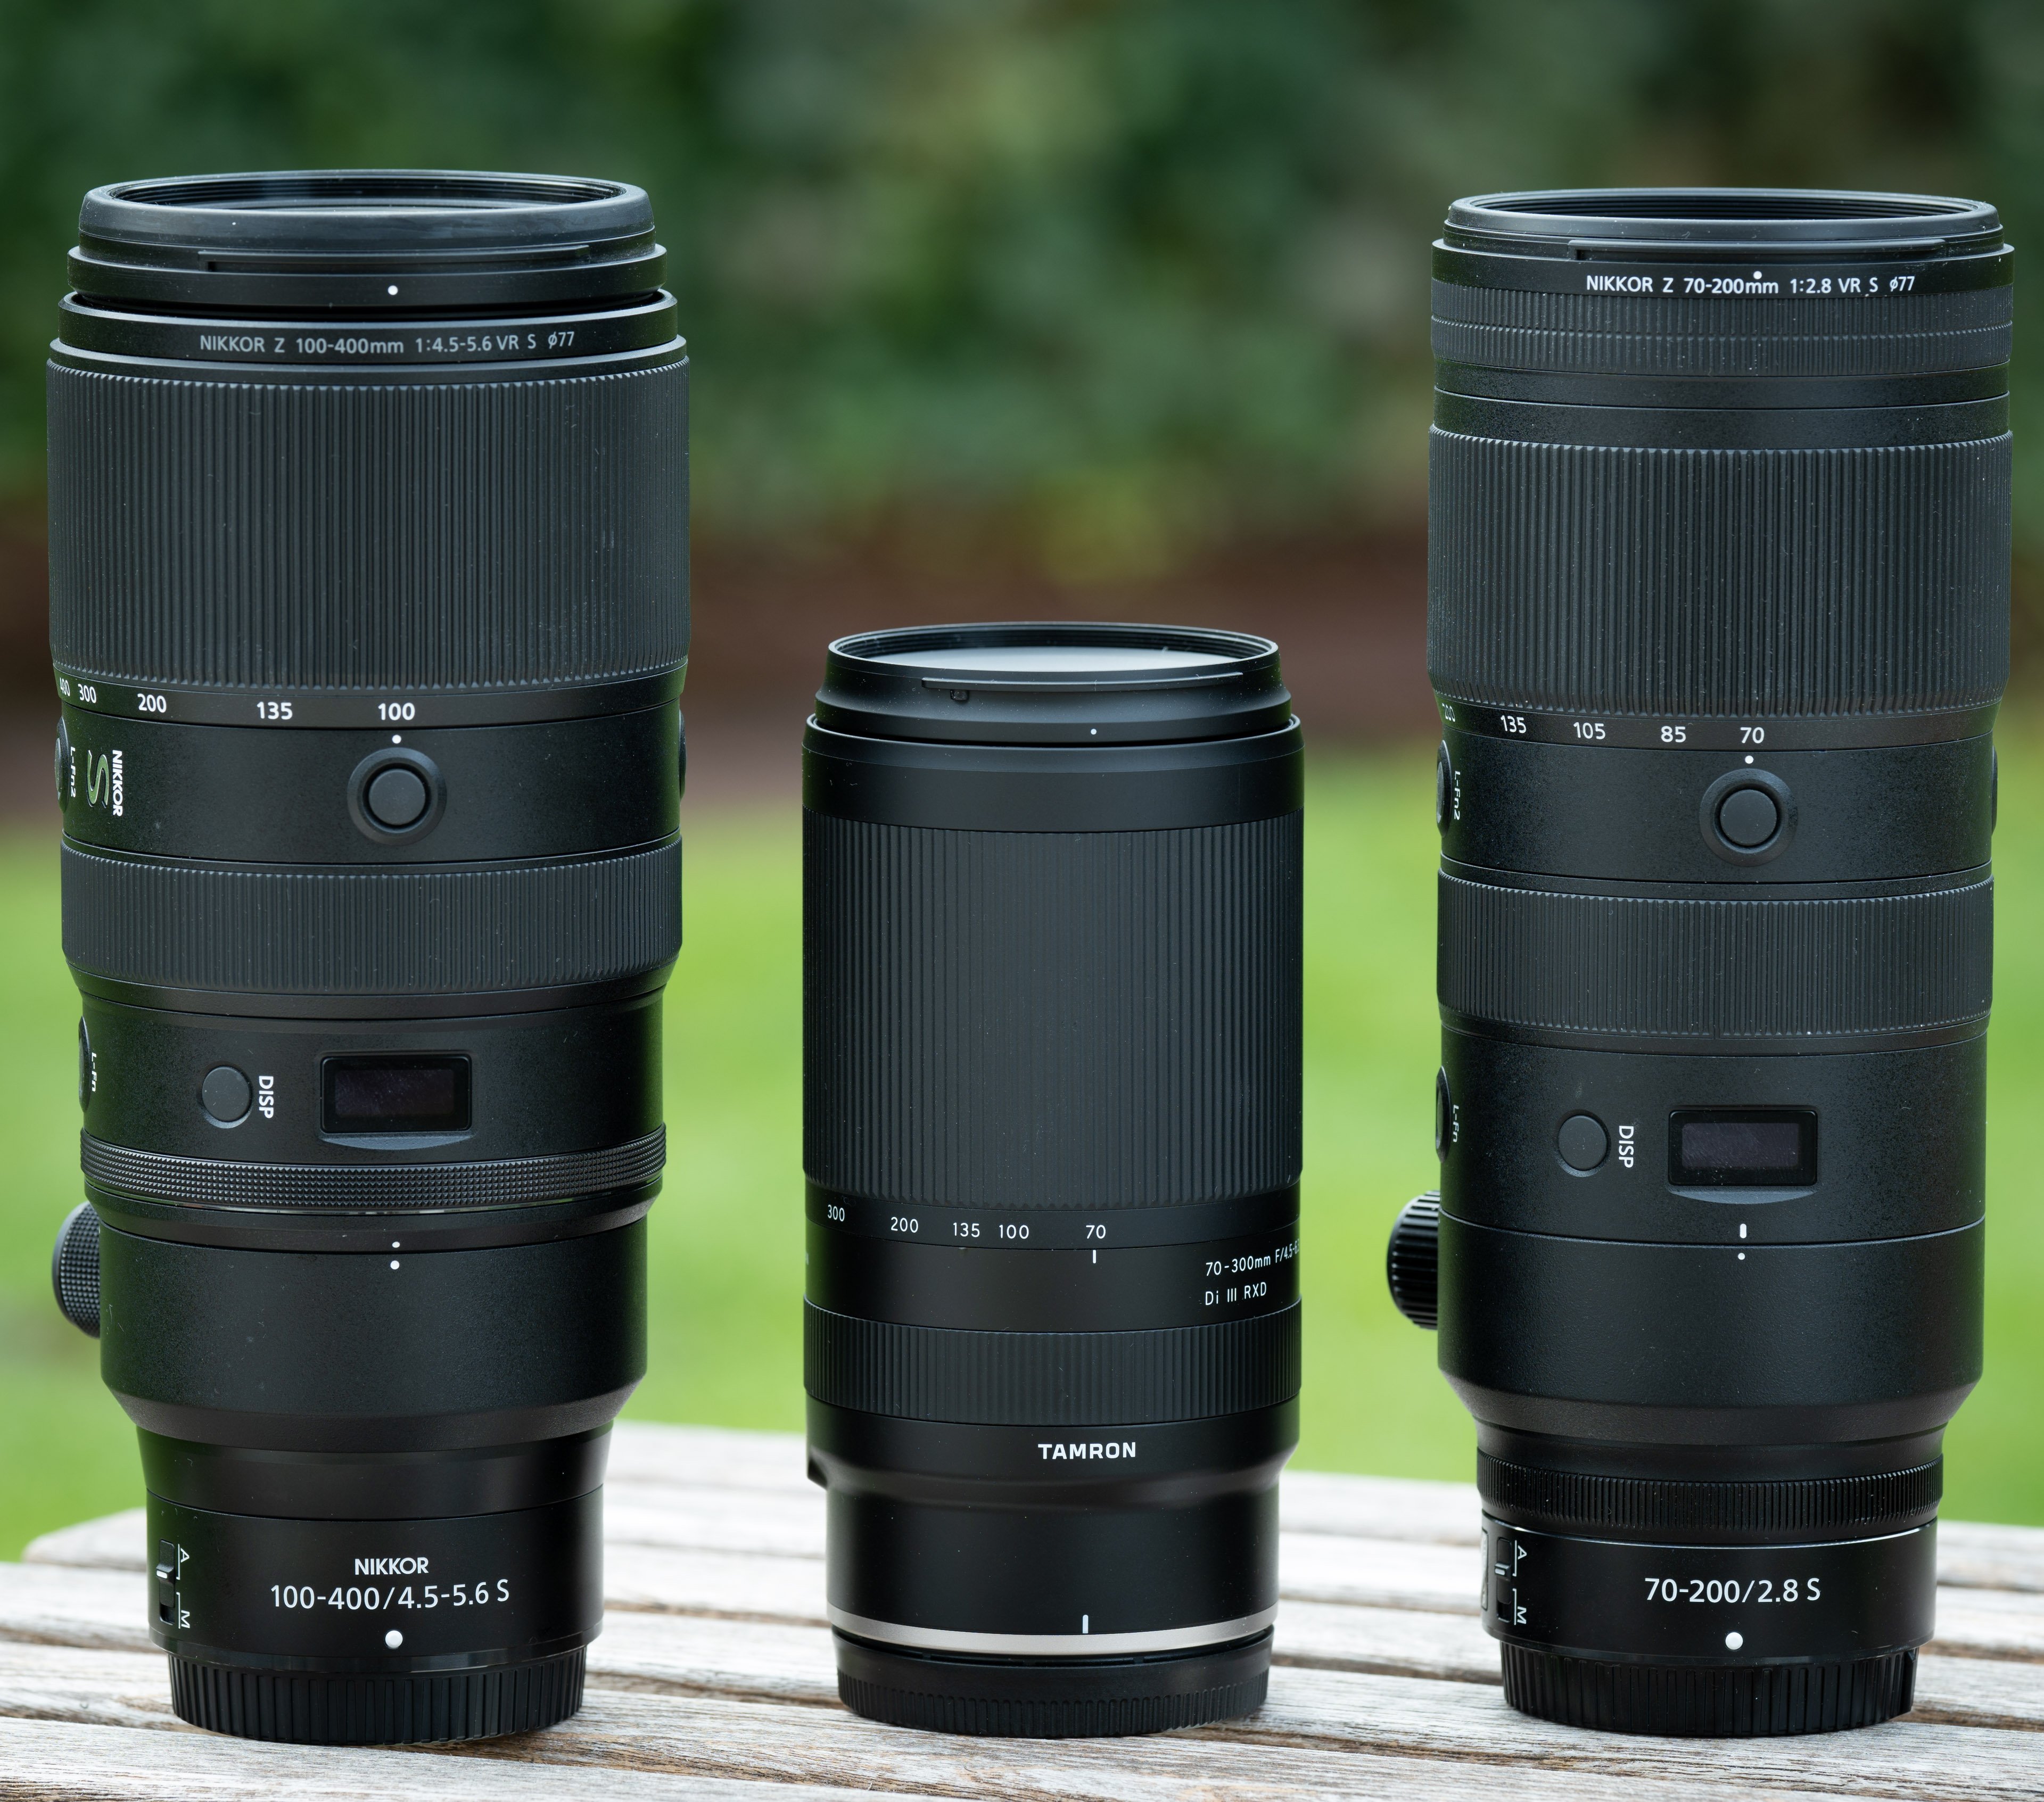 Tamron 70-300mm f/4.5-6.3 Di III RXD mirrorless lens for Nikon Z-mount  additional information - Nikon Rumors